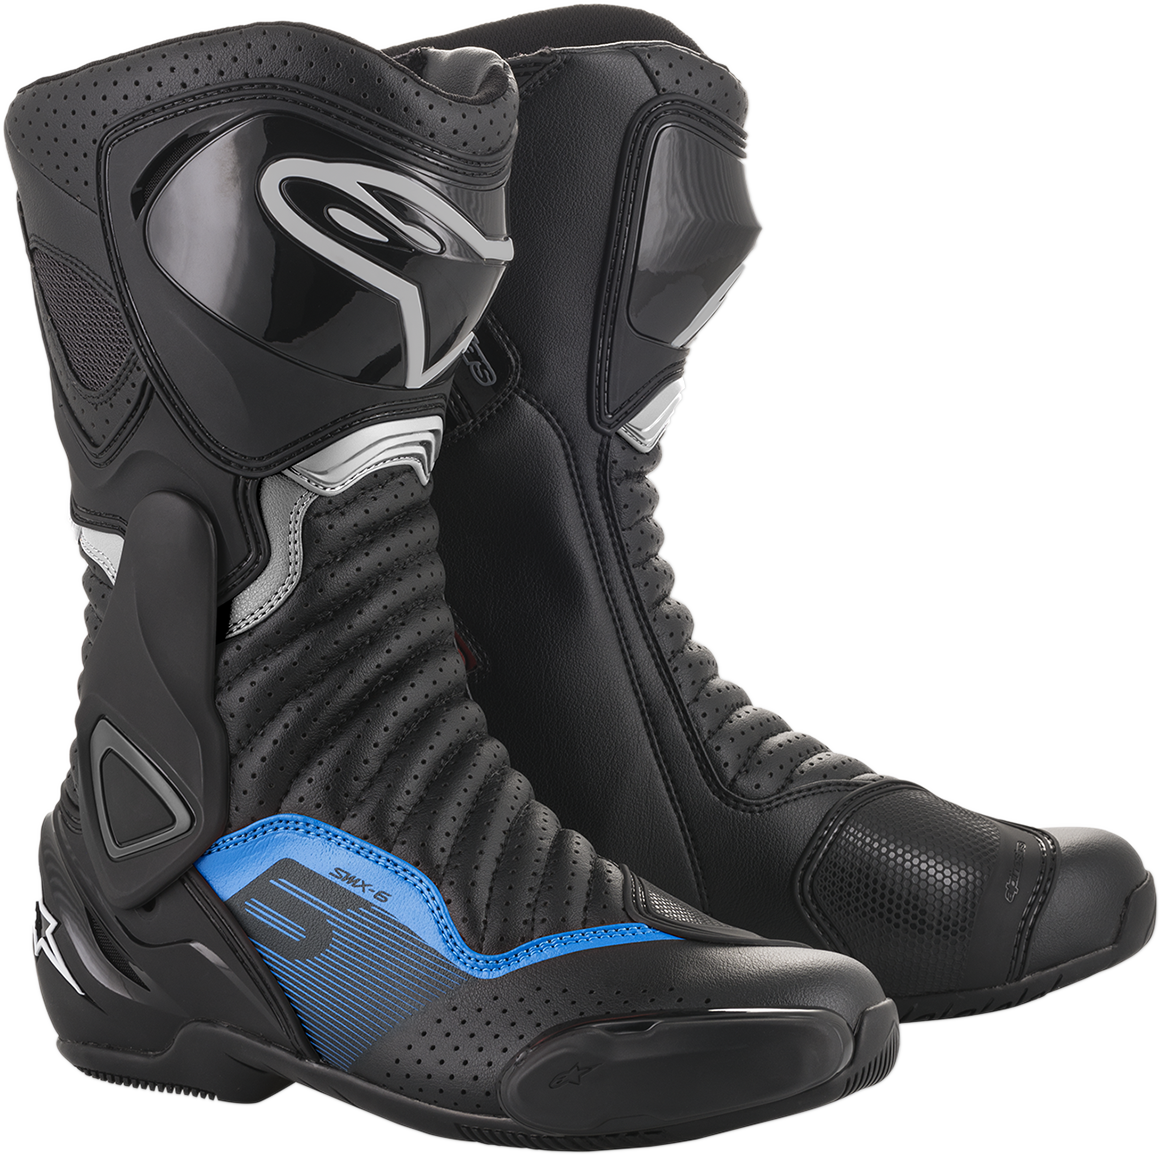 ALPINESTARS SMX-6 v2 Vented Boots - Black/Gray/Blue - US 13.5 / EU 49 2223017-1178-49